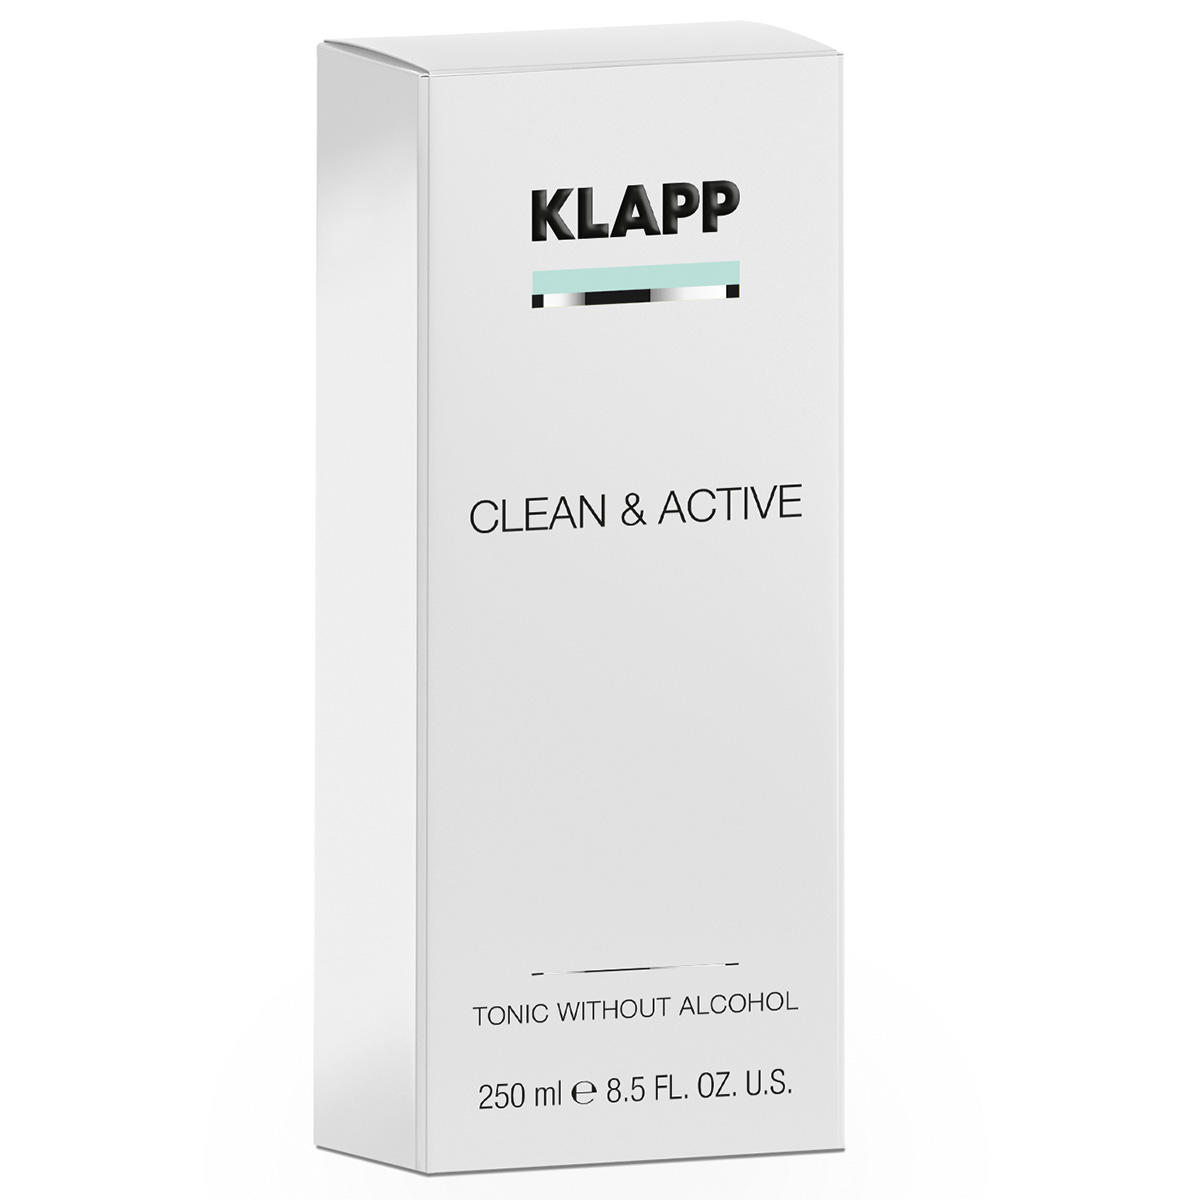 KLAPP CLEAN & ACTIVE Tonic without Alcohol 250 ml - 2